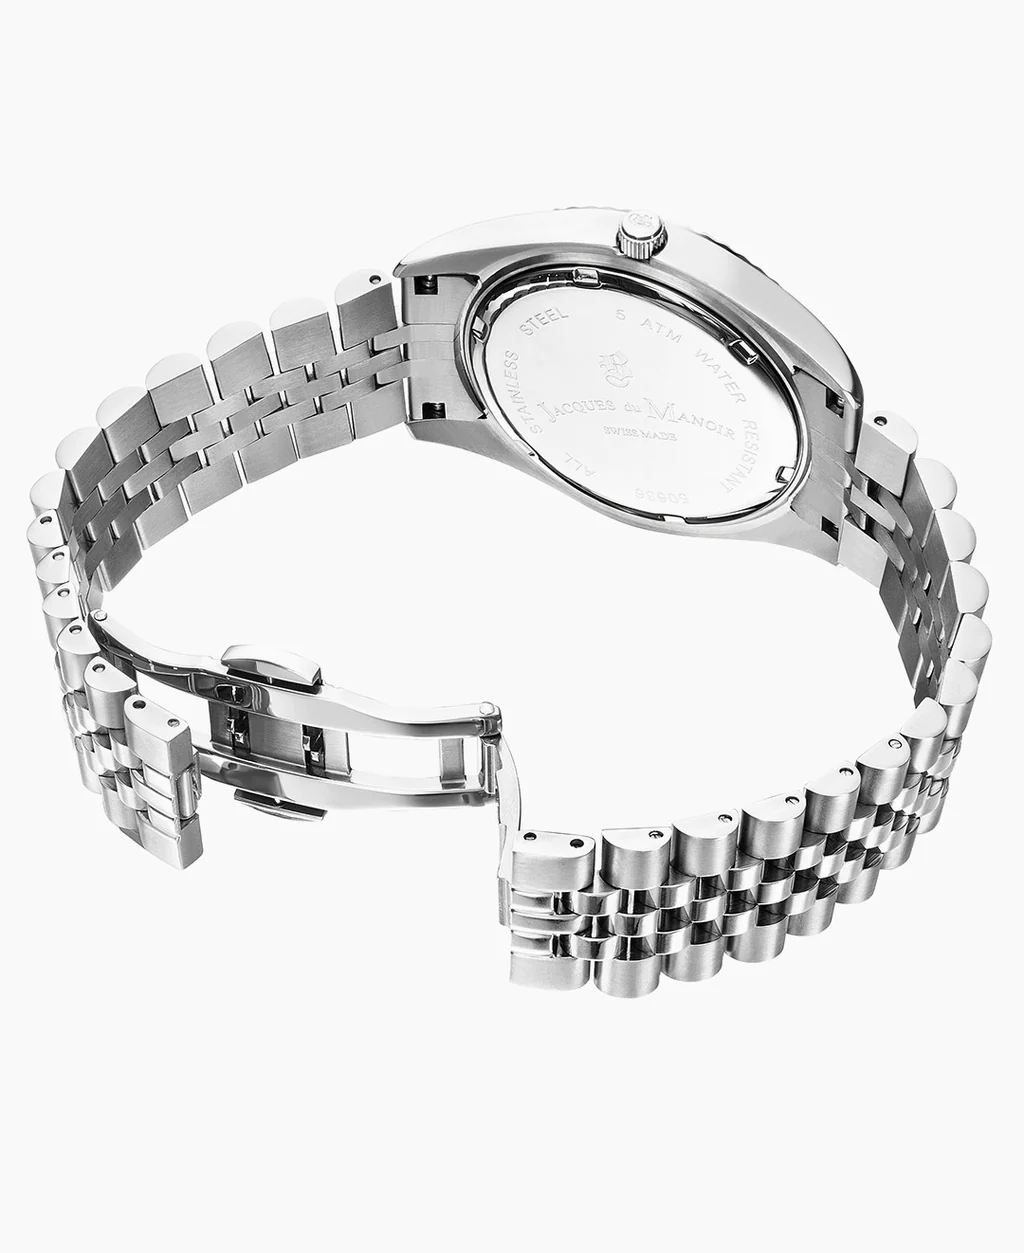 Jacques Du Manoir - JWG00301 - Inspiration Series - Wrist Watch For Men